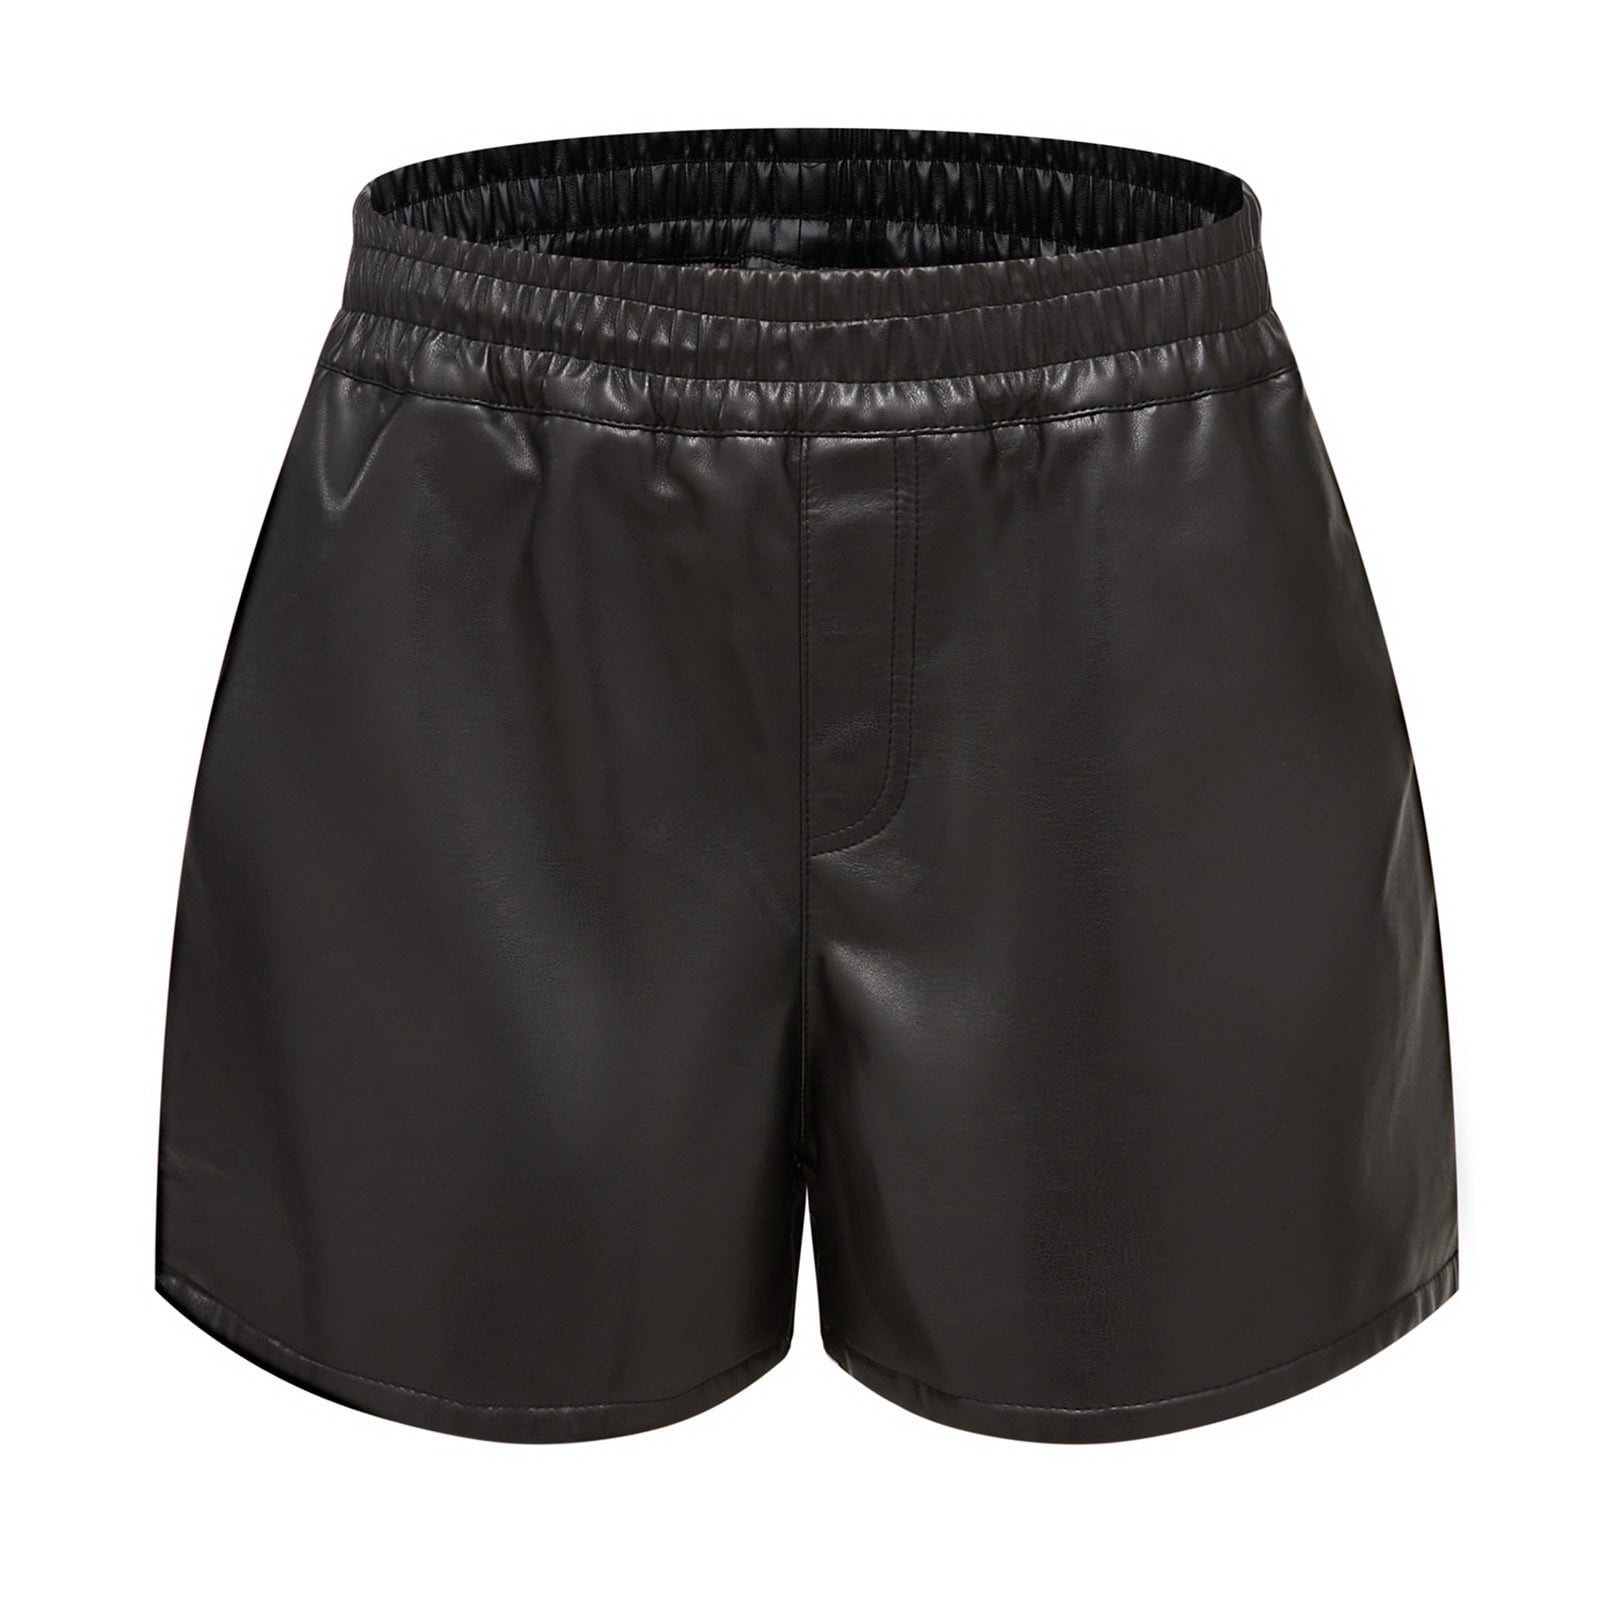 16Arlington Ceriden leather shorts - Black